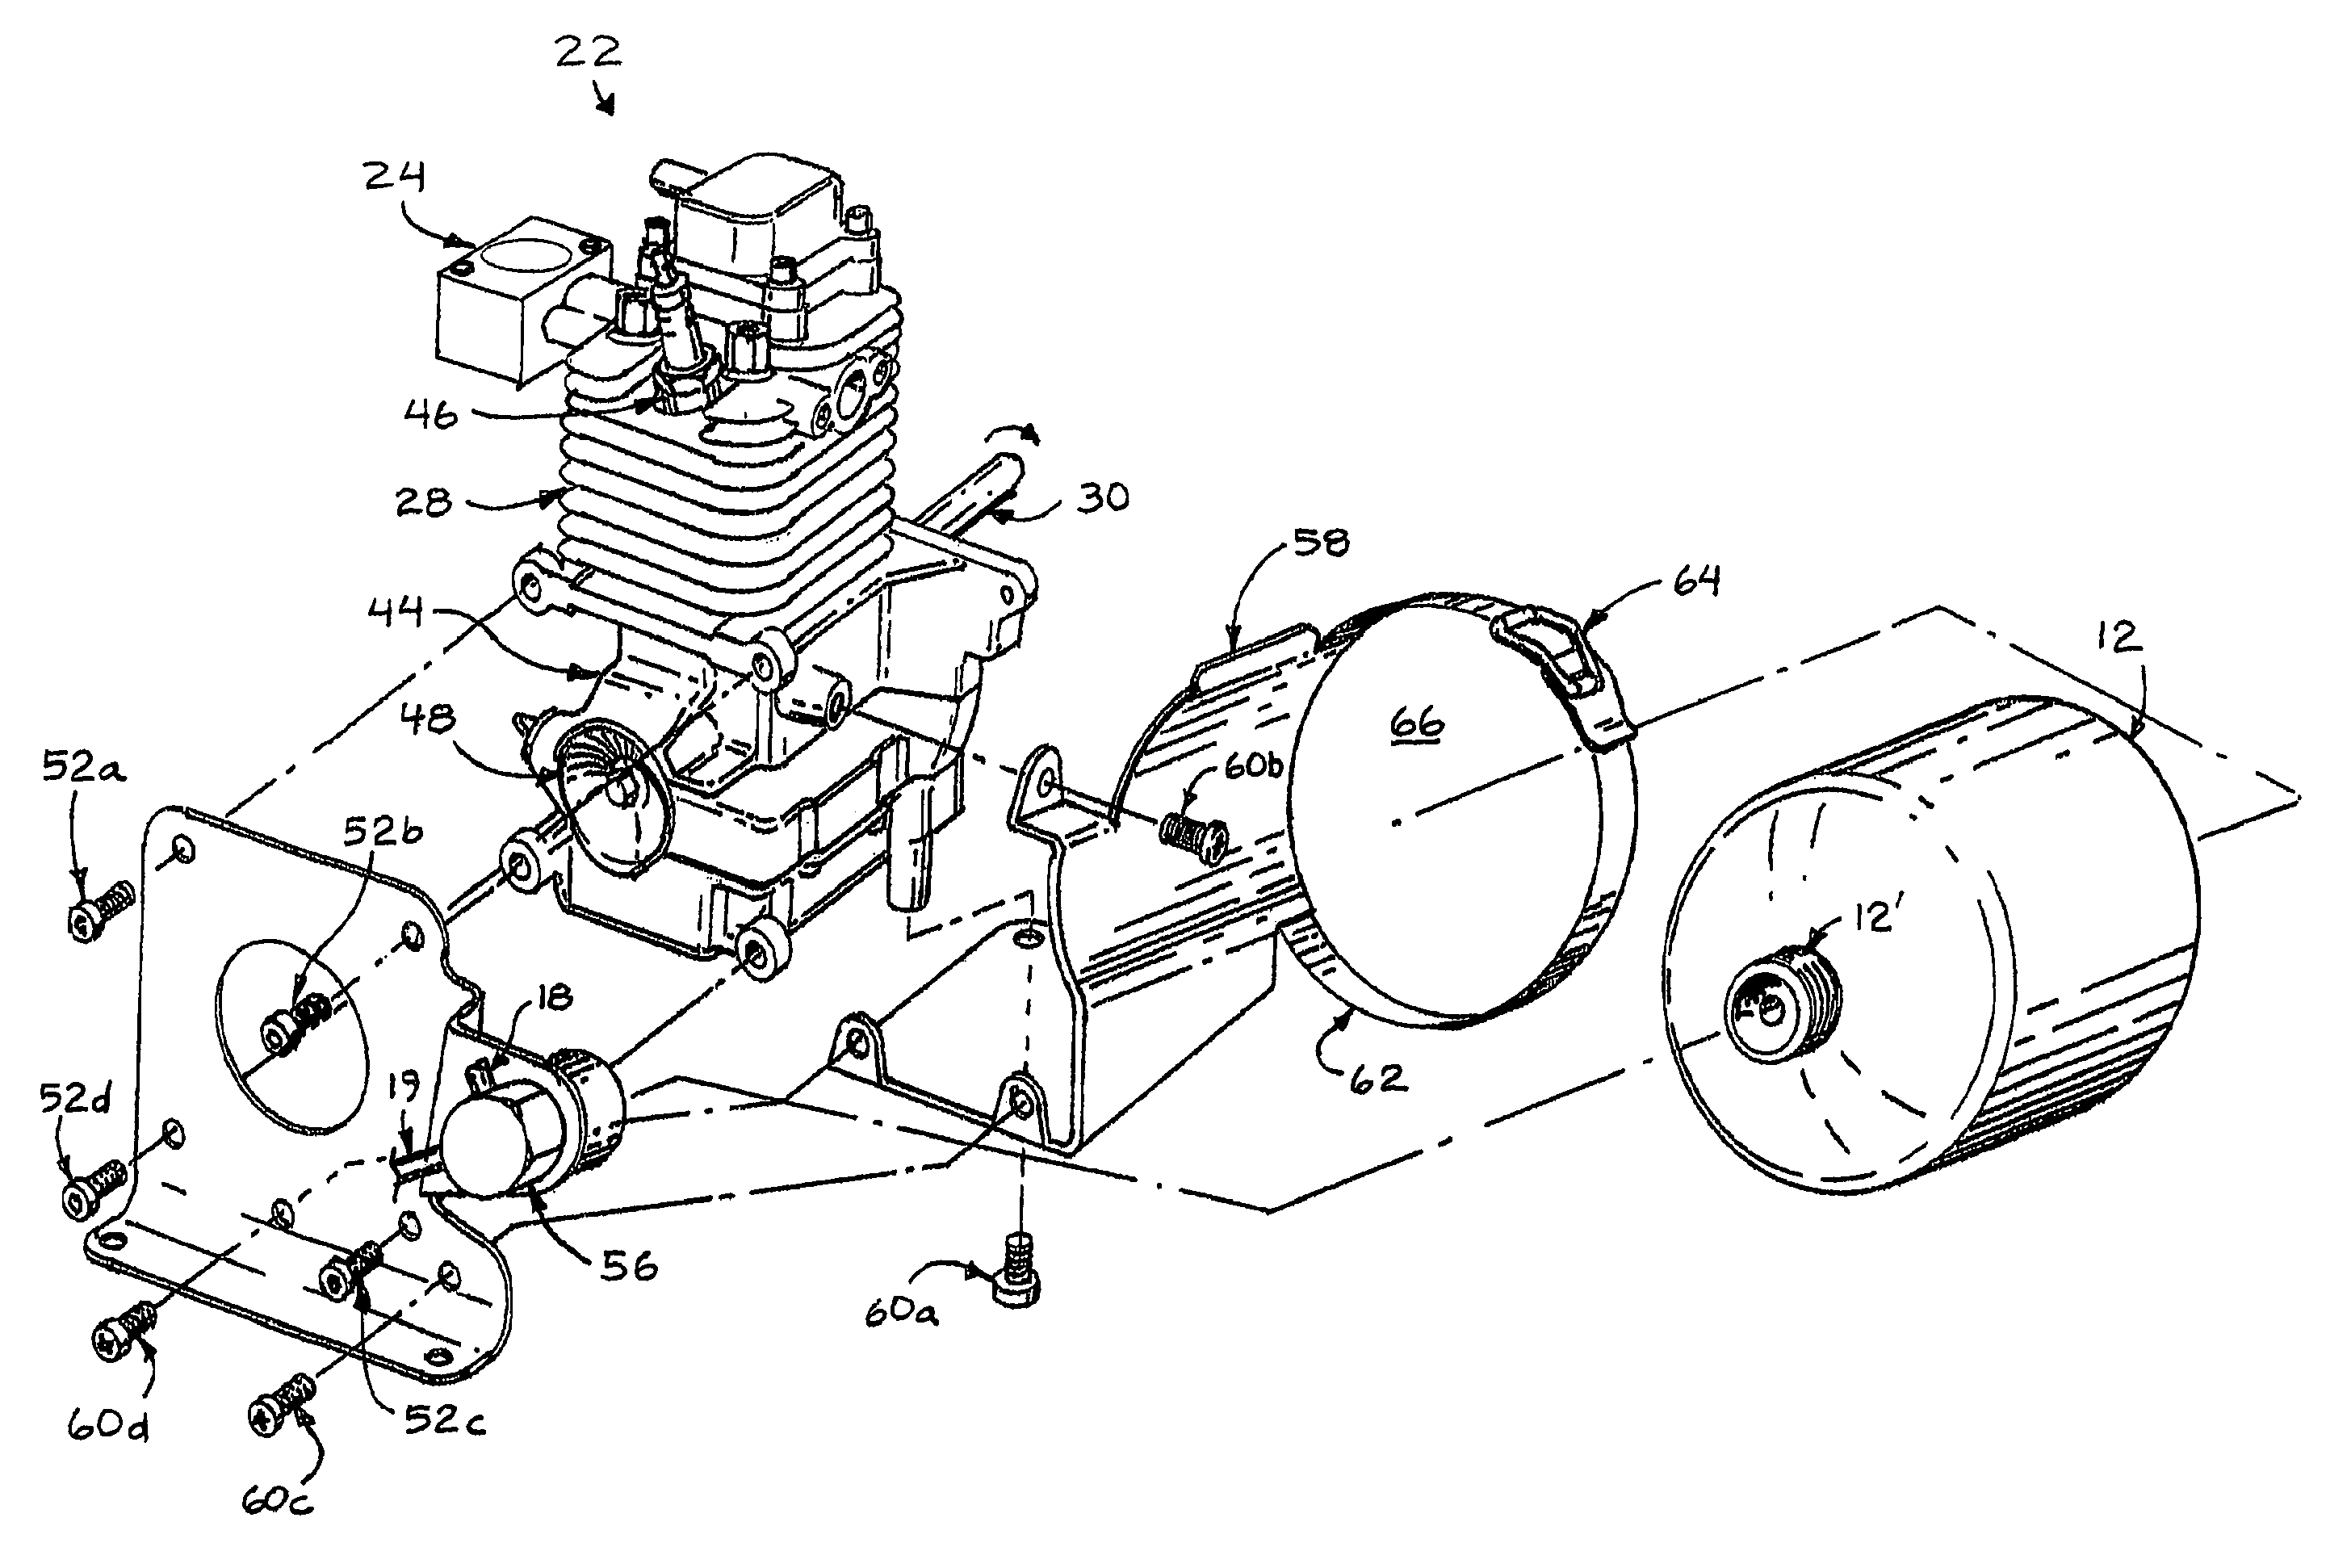 Portable gas powered internal combustion engine arrangement